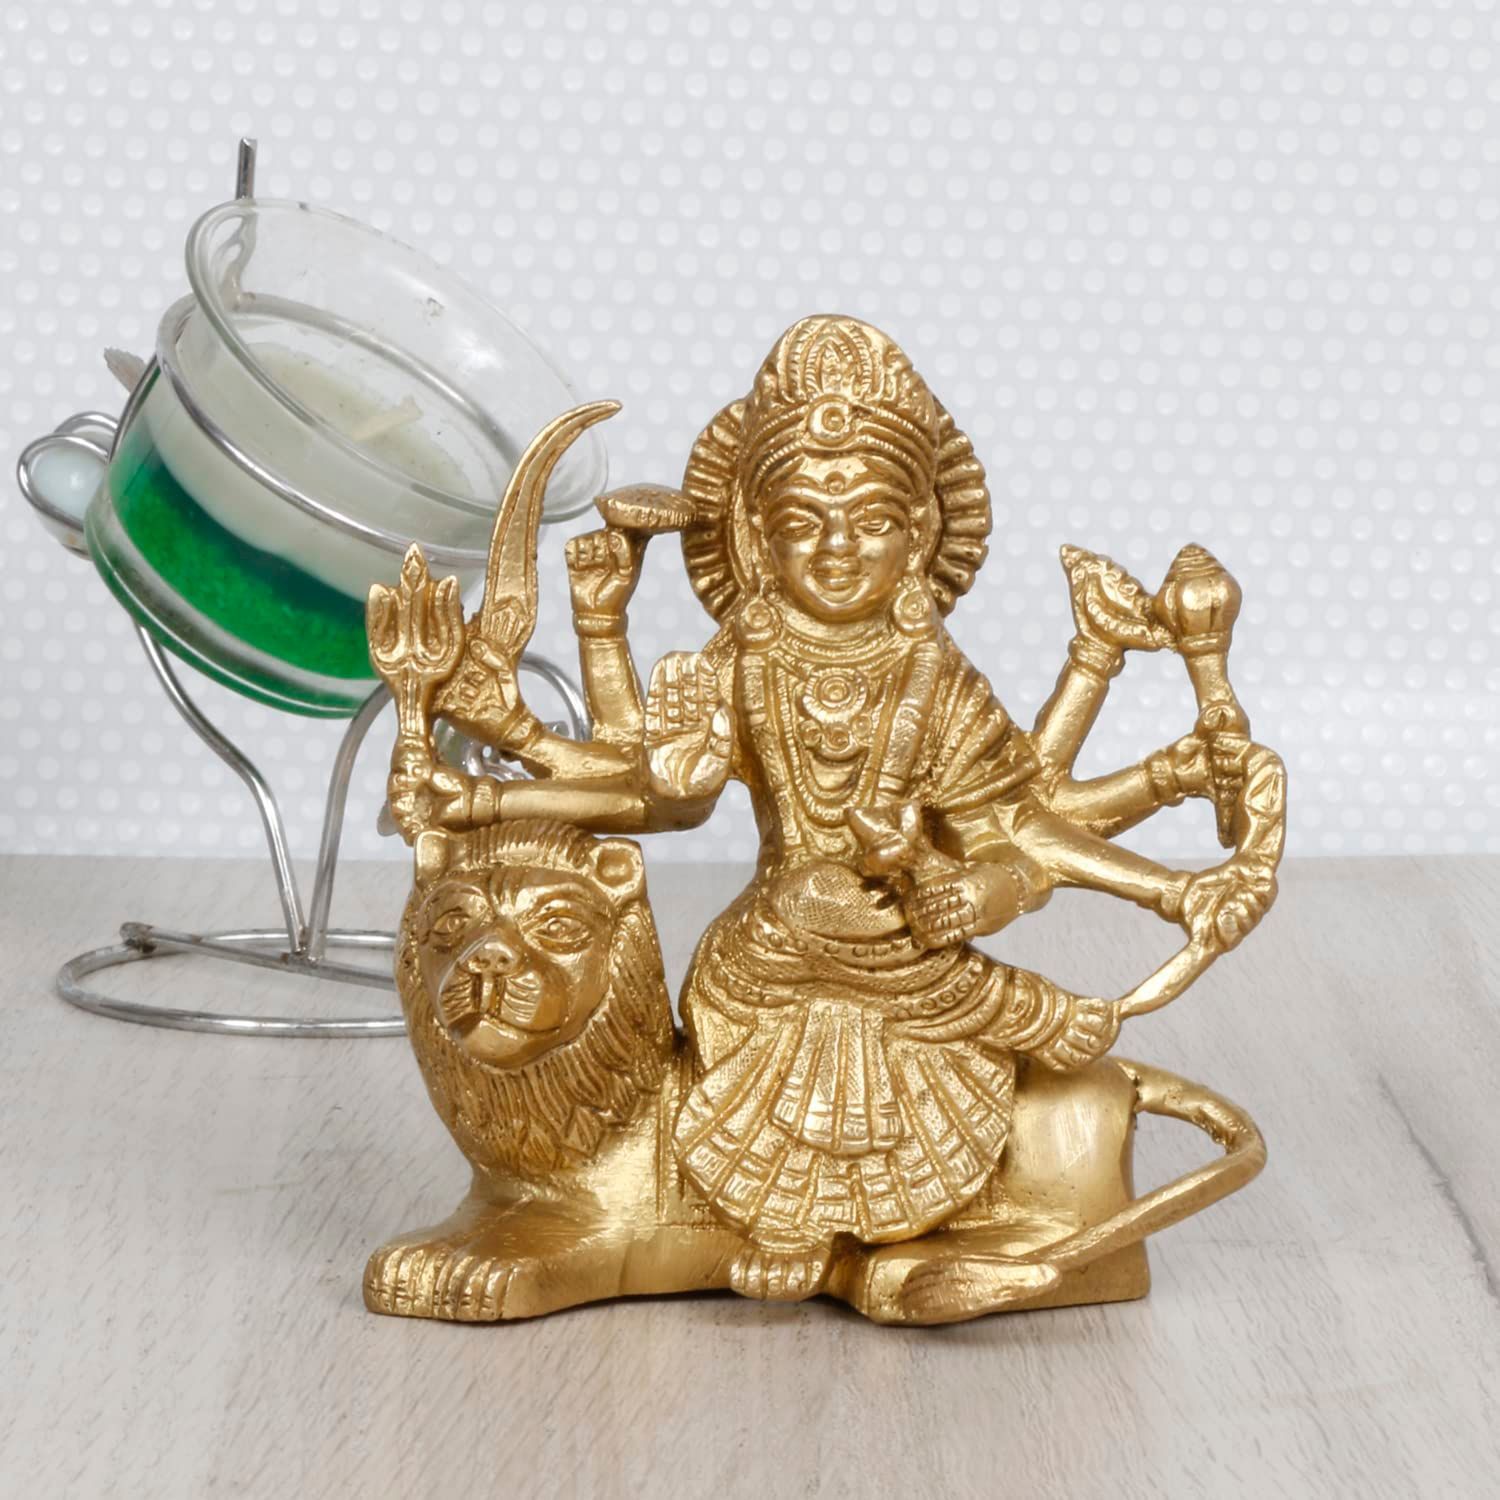 Mini Religious Pooja Gift Item for Mandir Set of 3 Hanuman,Maa Durga,Ganesha  | eBay